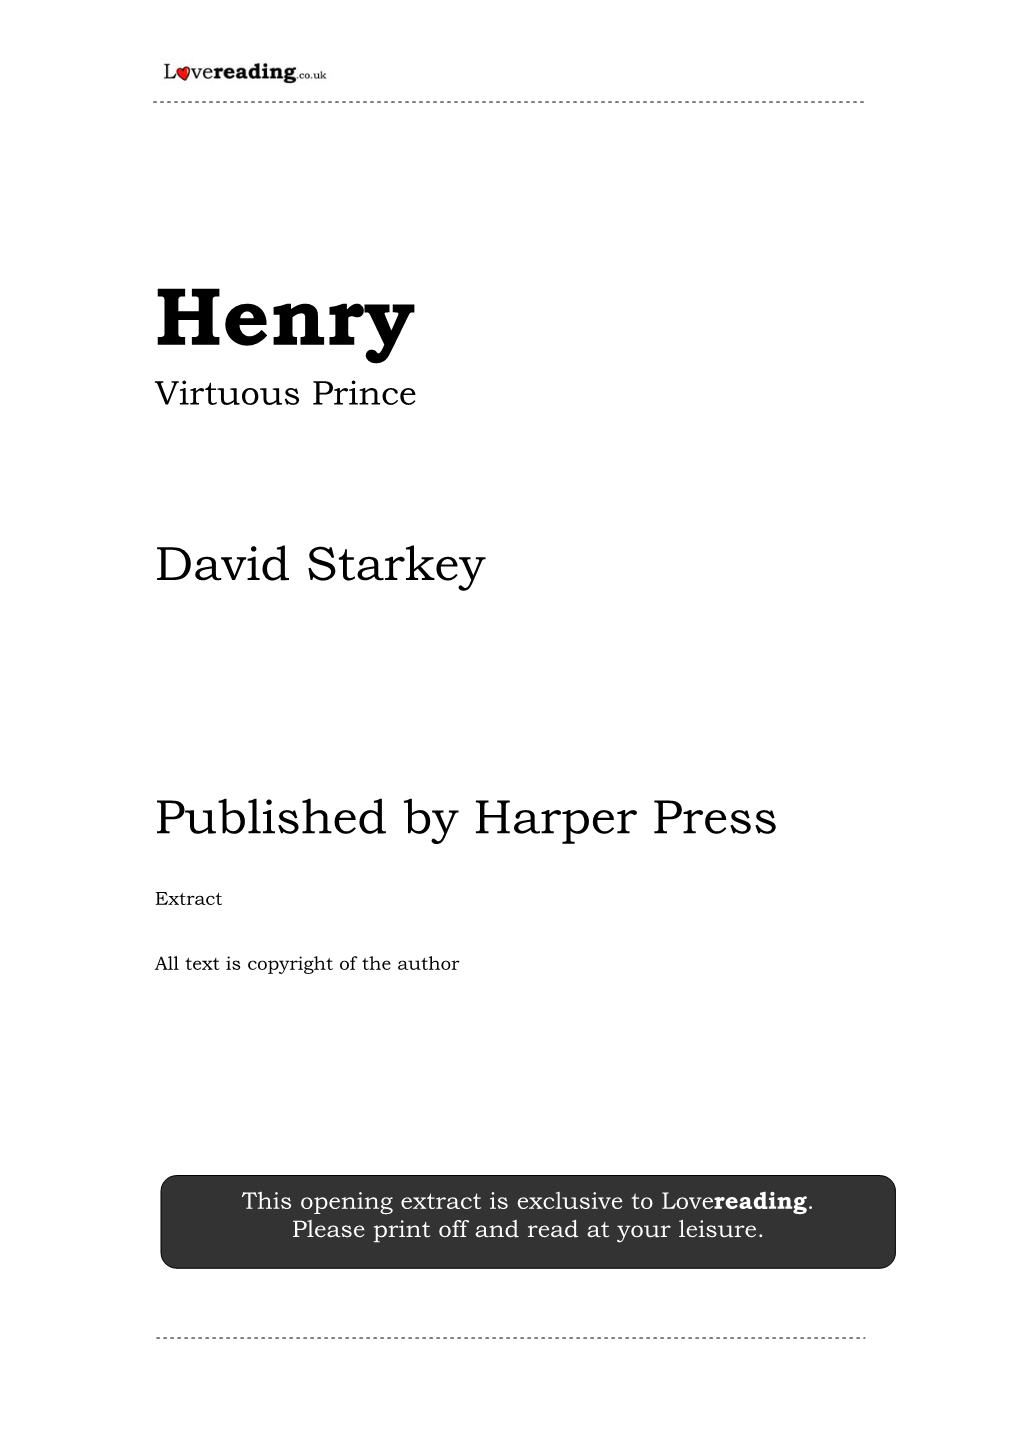 David Starkey Published by Harper Press